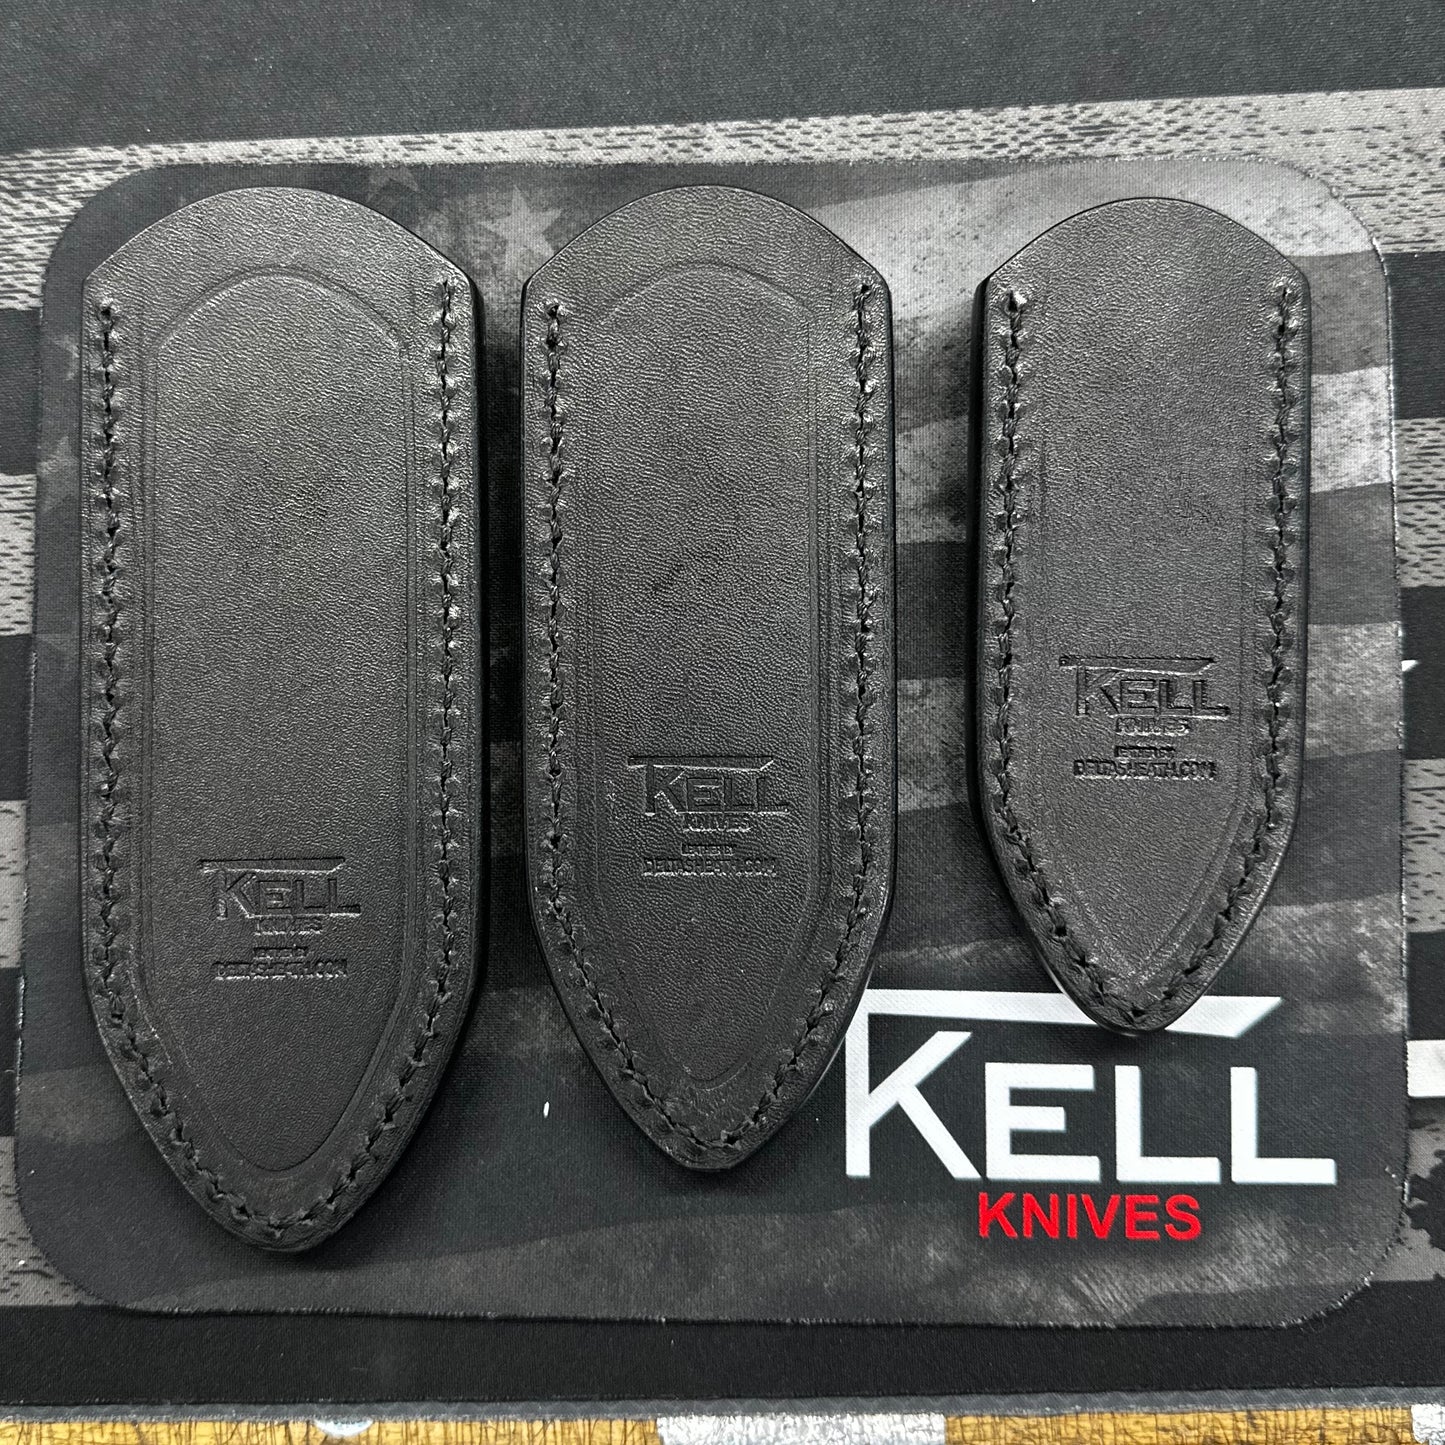 The T. Kell Delta Leather Sheath